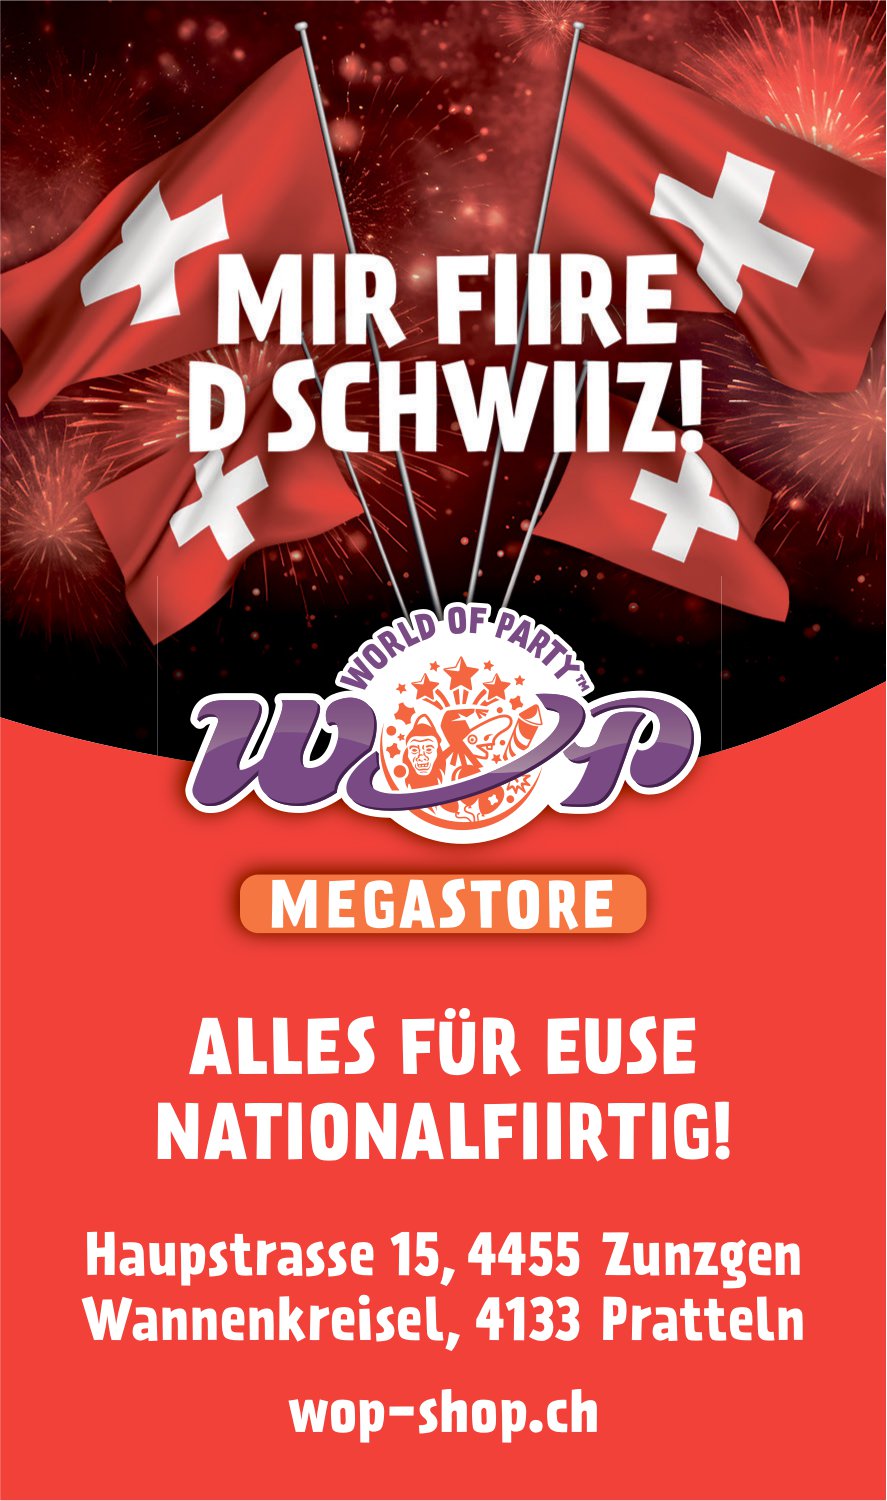 Wop Shop, Zunzgen & Pratteln - Mir fiire d Schwiiz!